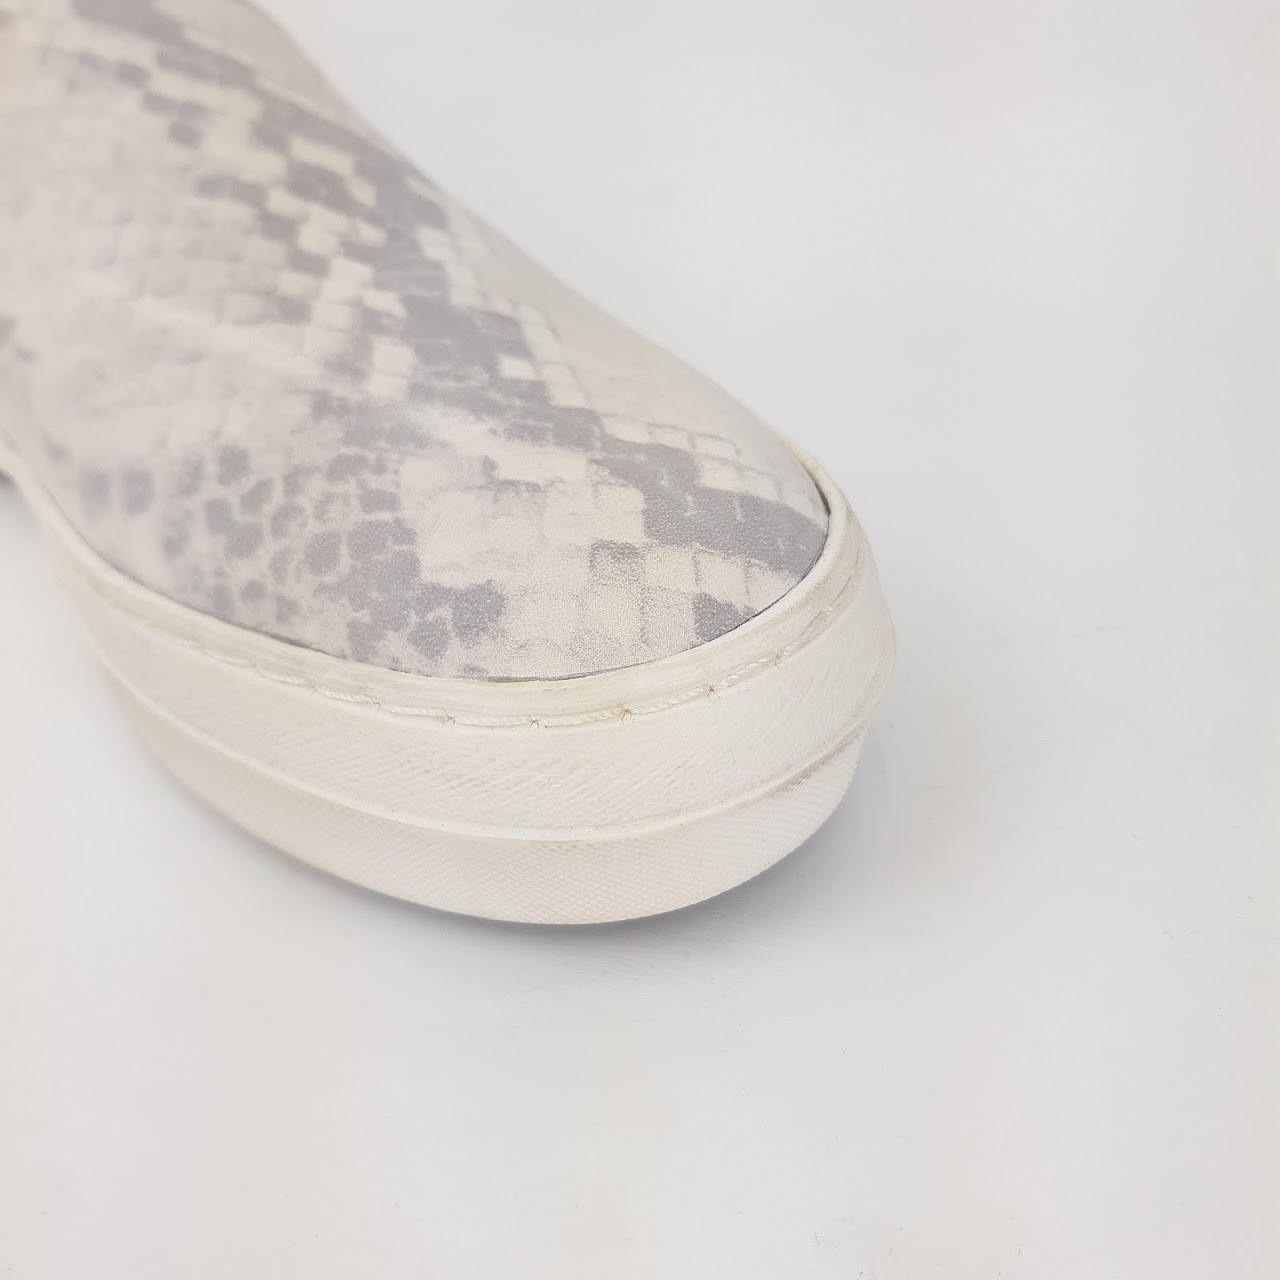 McQ Alexander McQueen Snake Print Slip On Sneakers